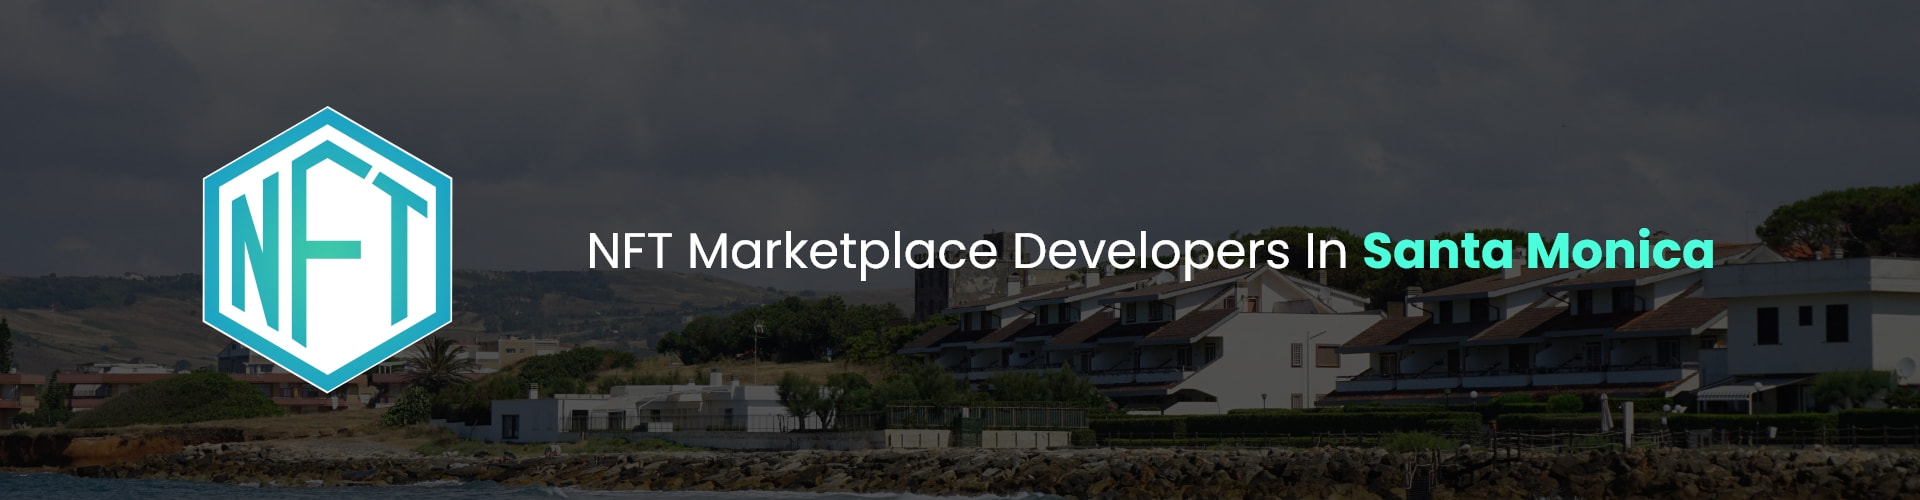 hire nft marketplace developers in santa monica